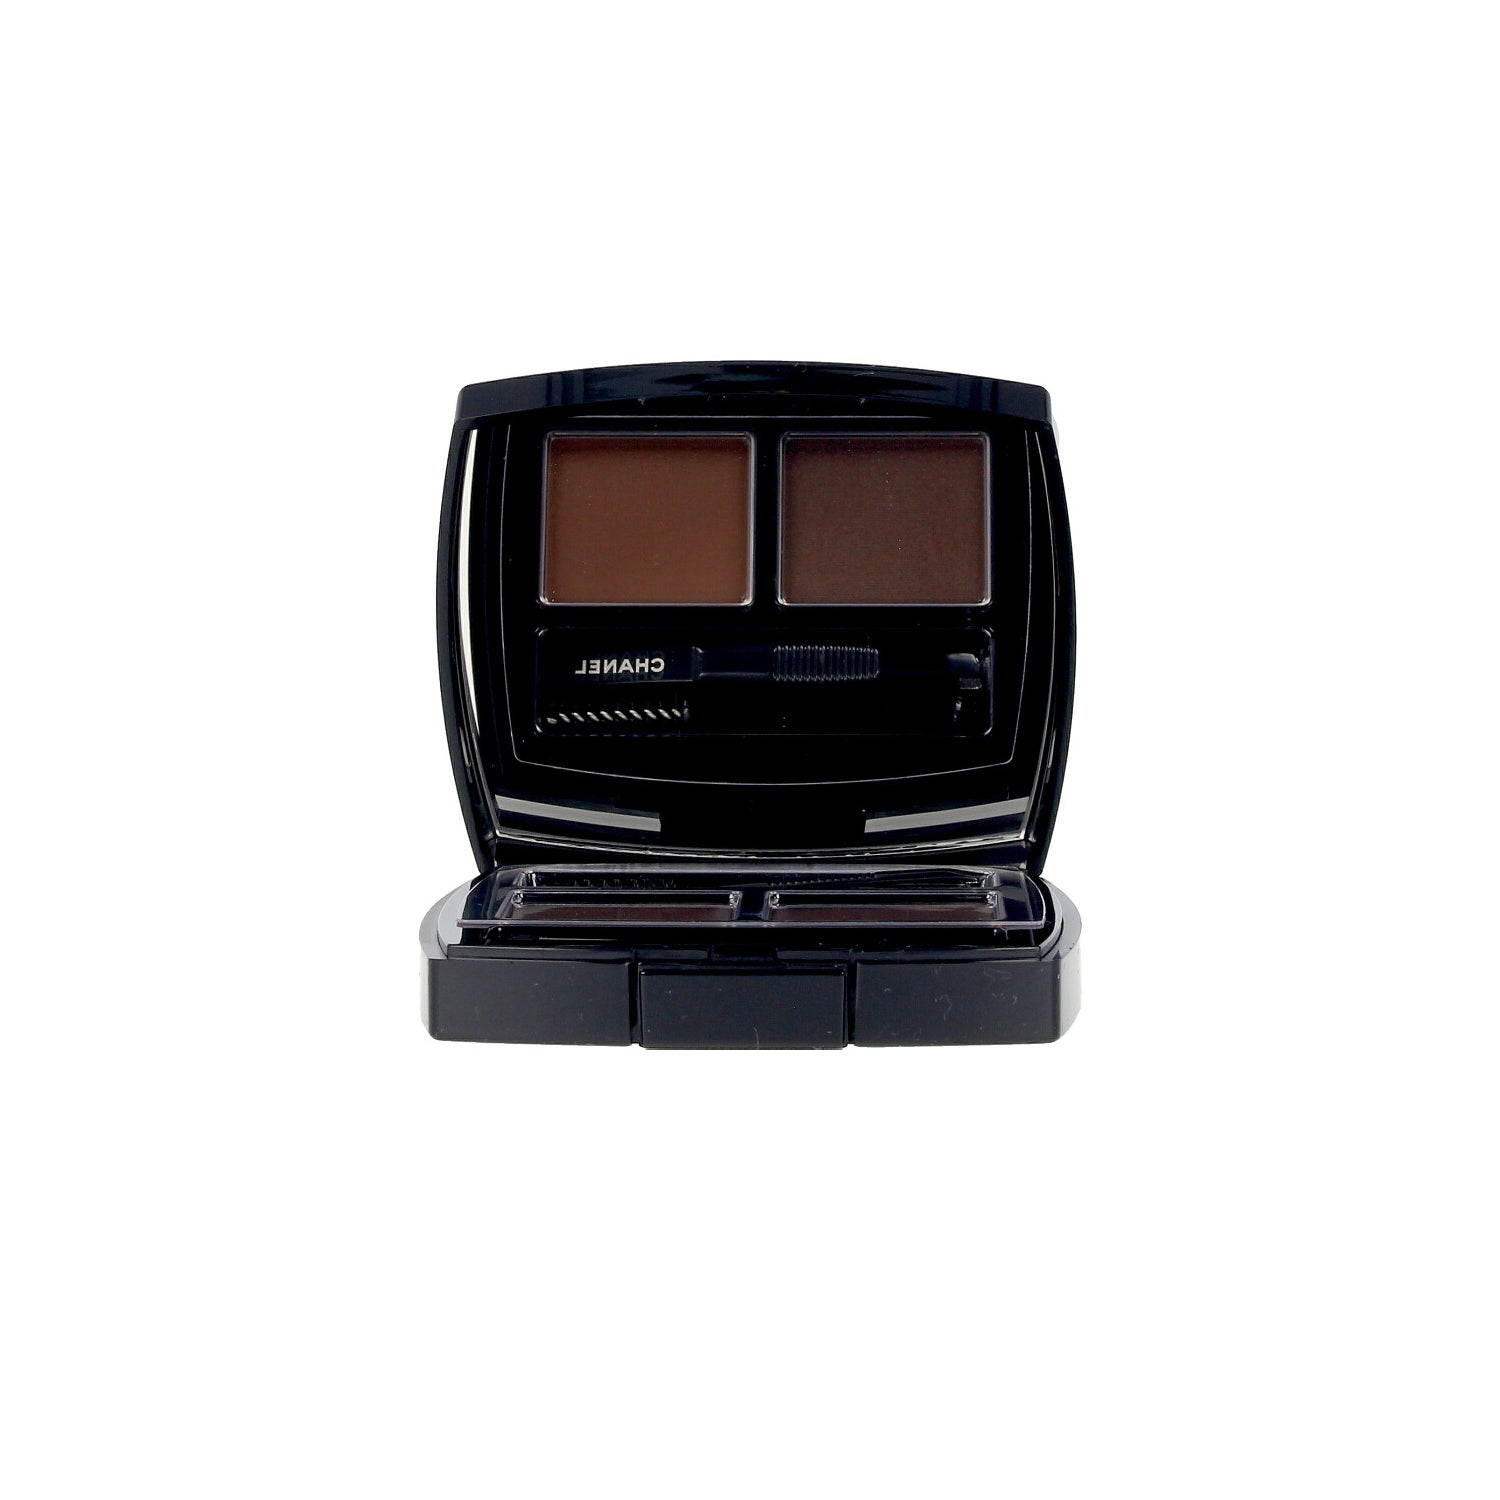 Chanel La Palette Sourcils Eyebrow Makeup Duo No. 02 Medium 4g